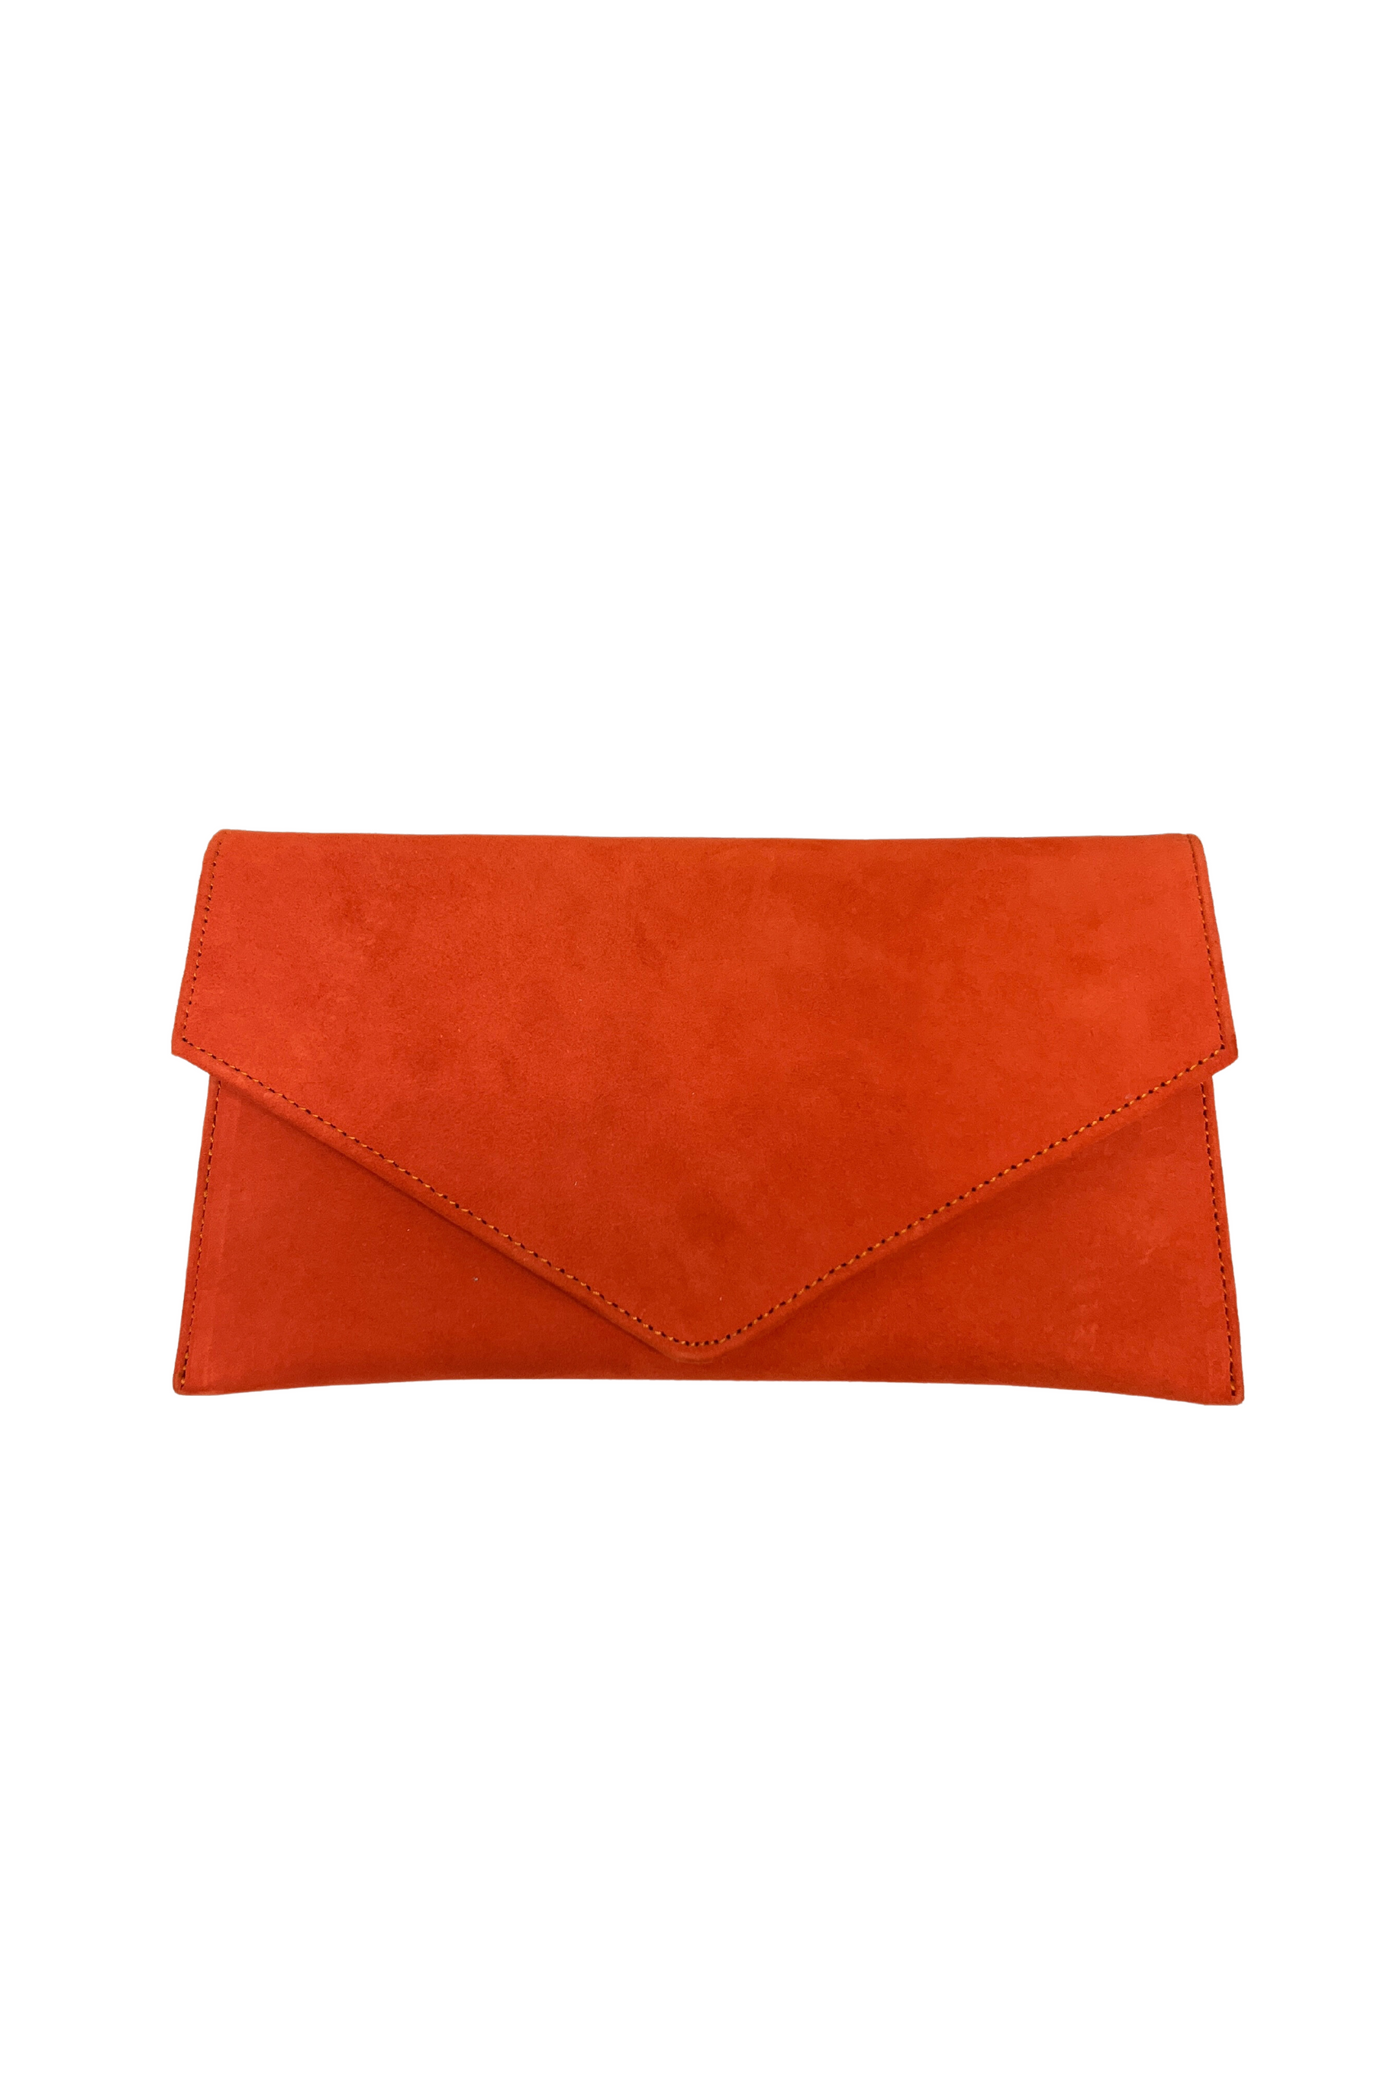 Orange Clutch Bag